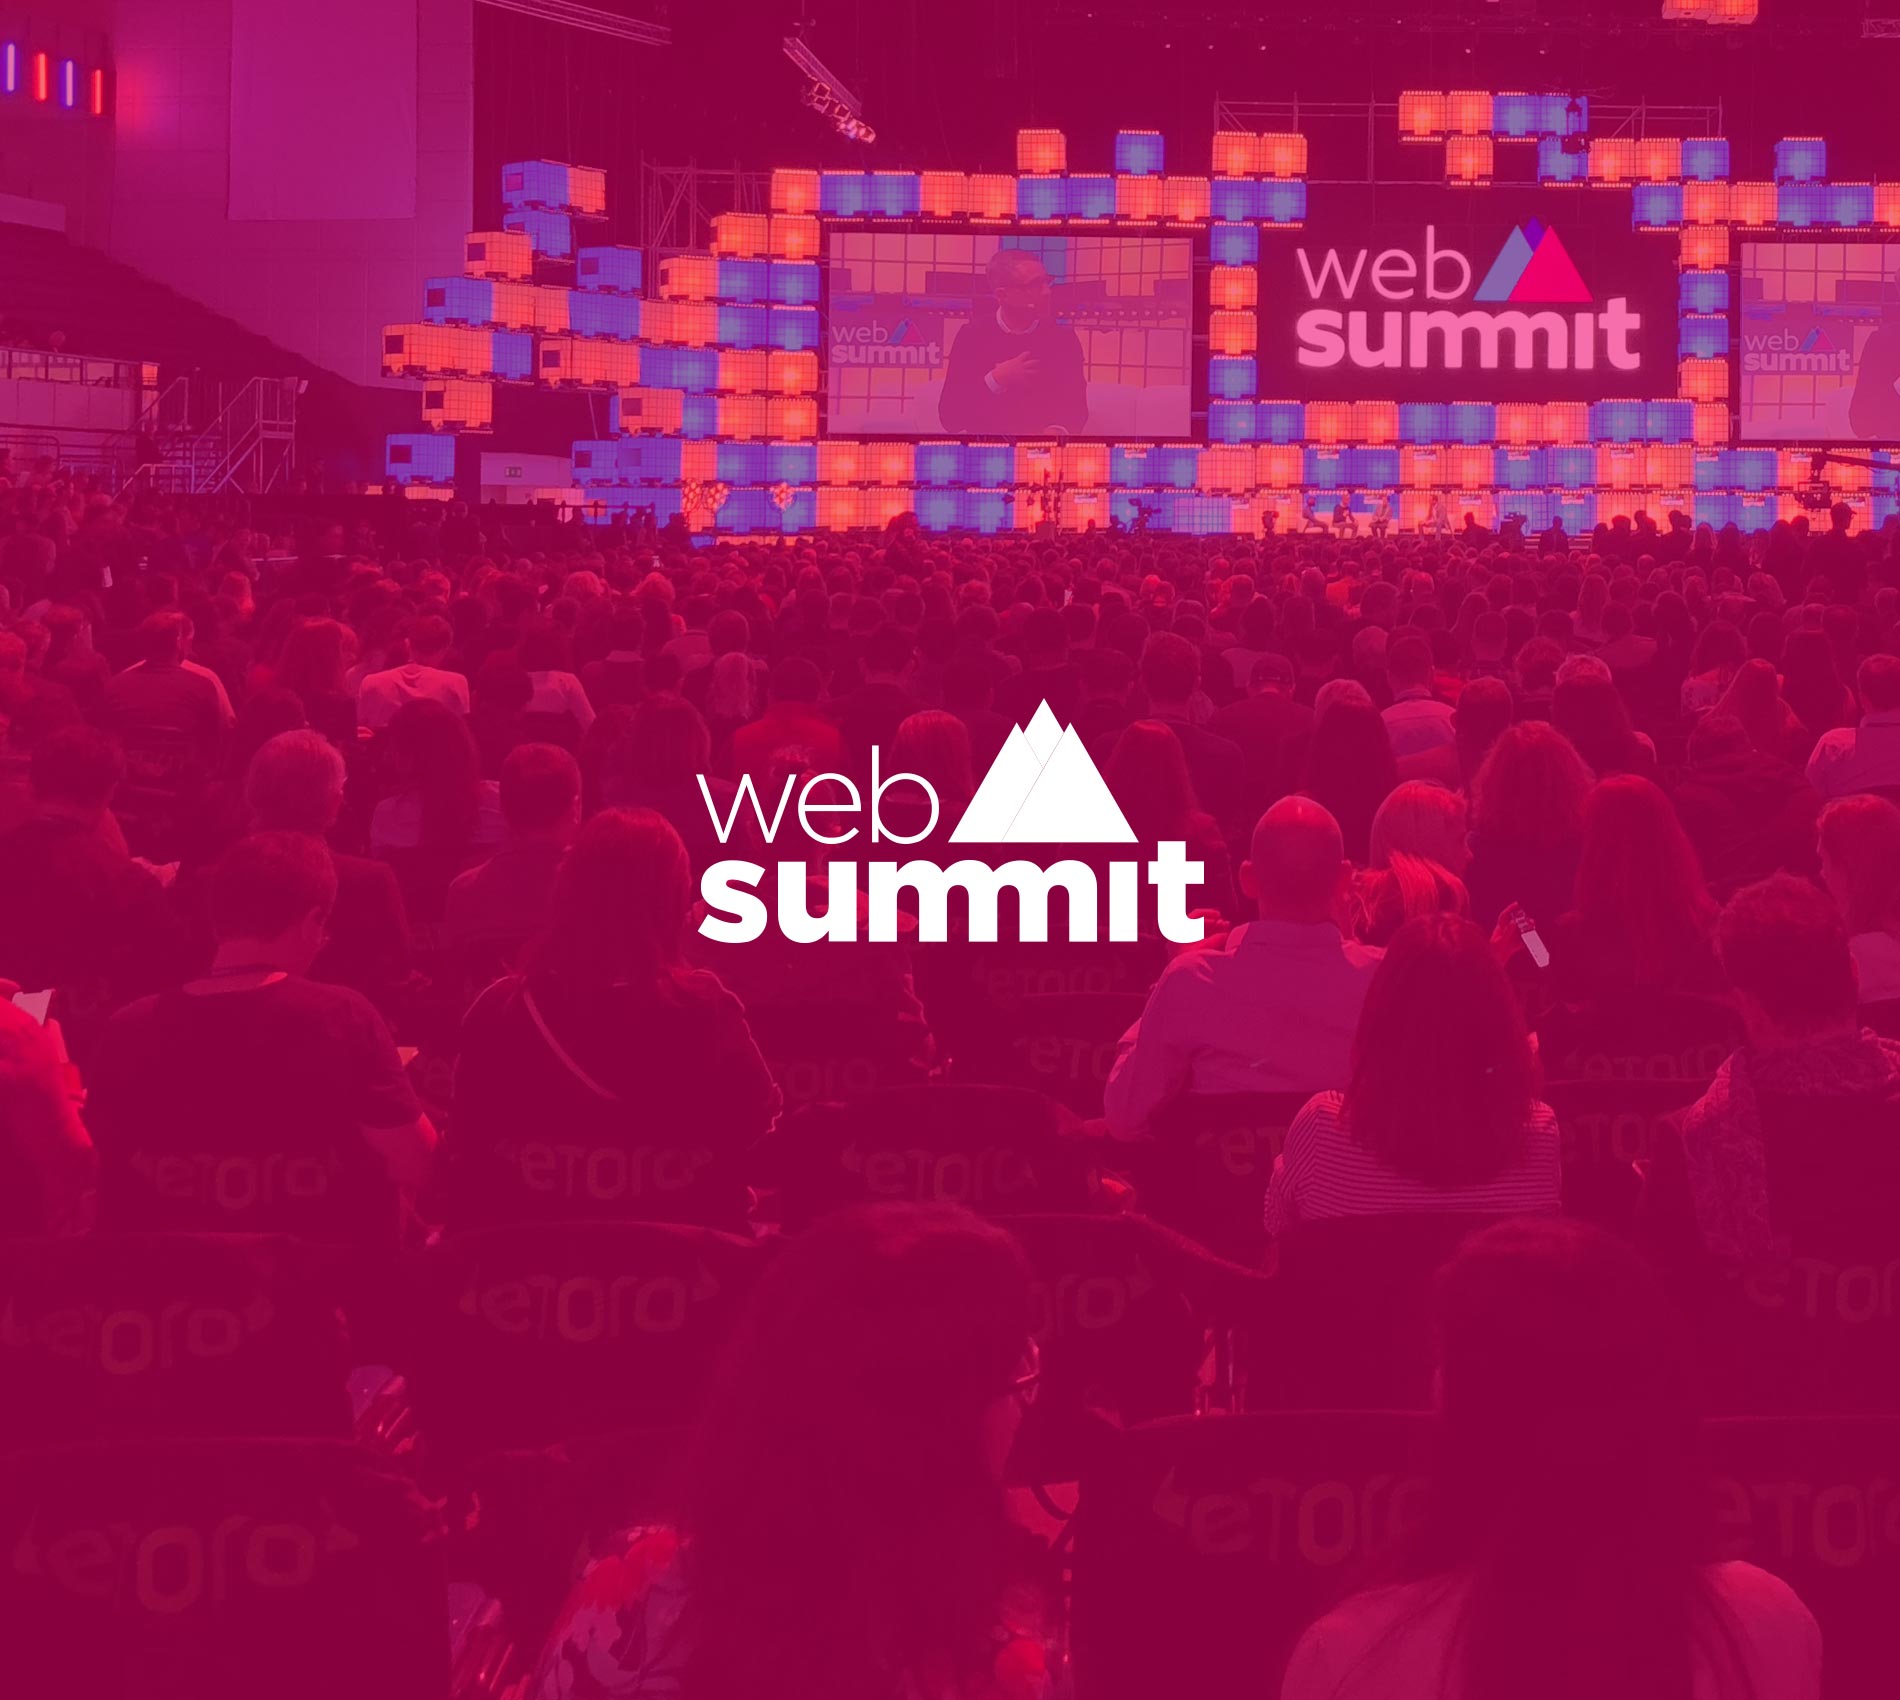 Web Summit 2018, Lisbon